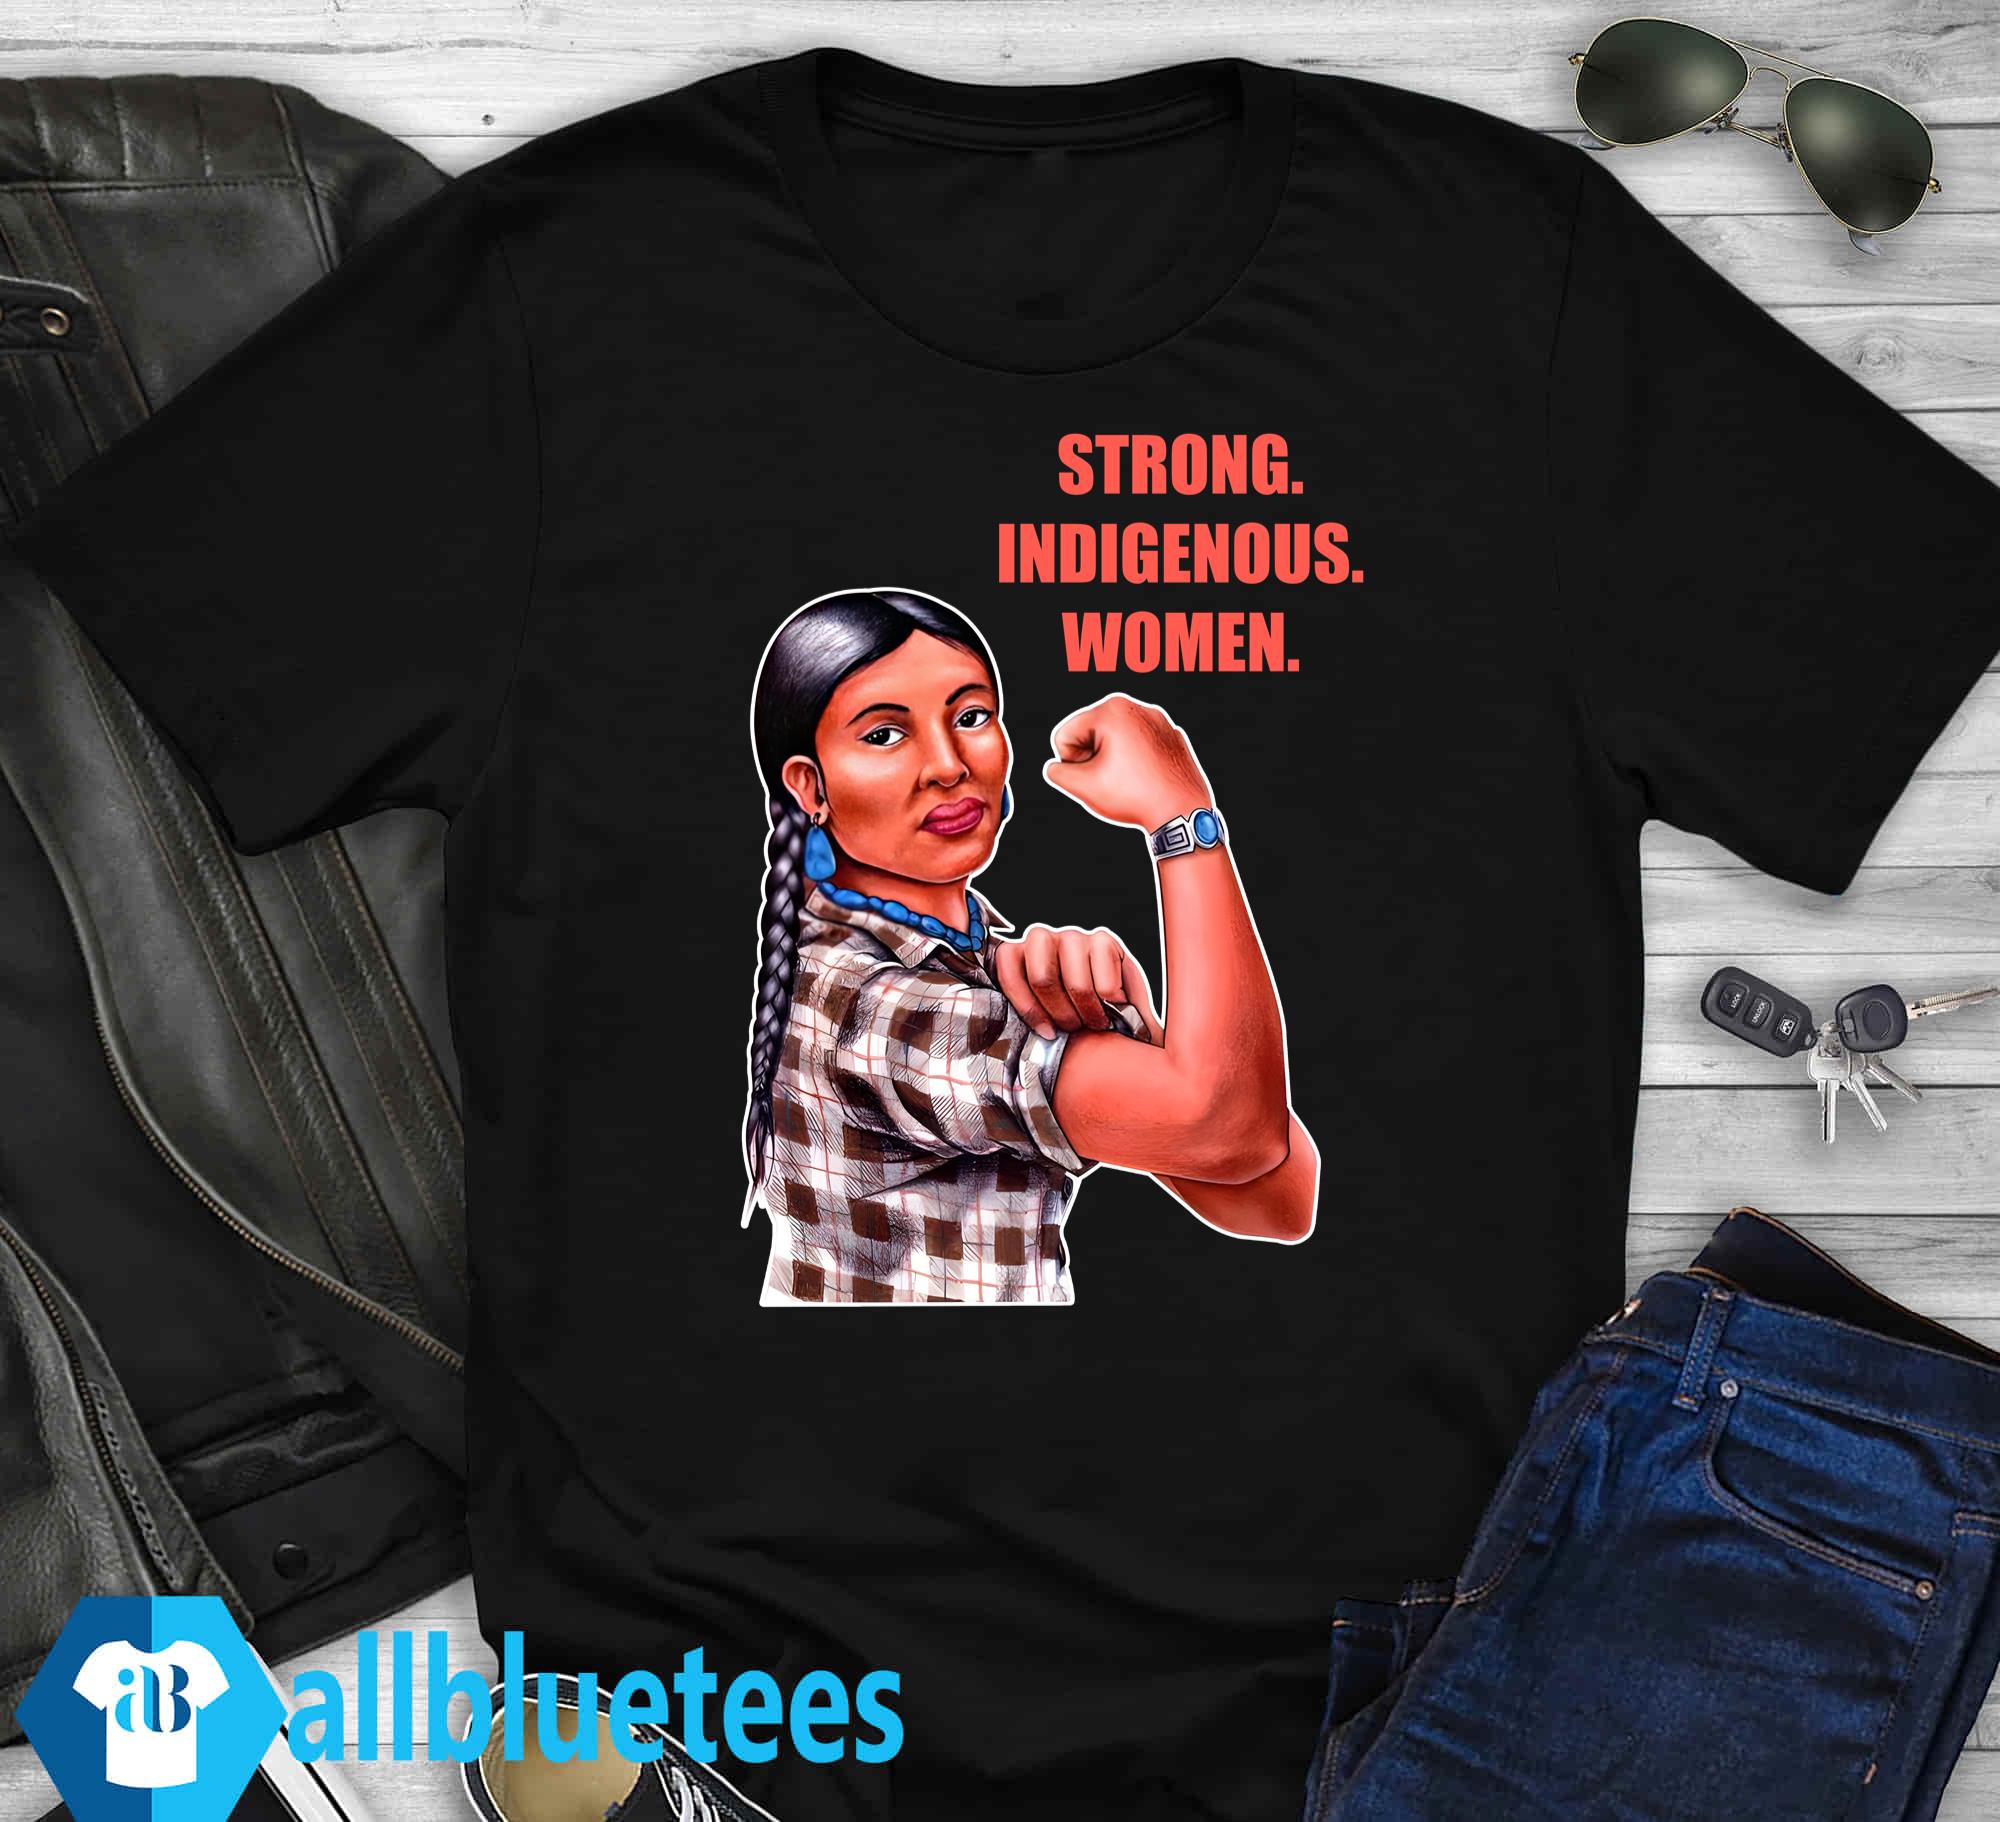 Strong Indigenous Woman Shirt